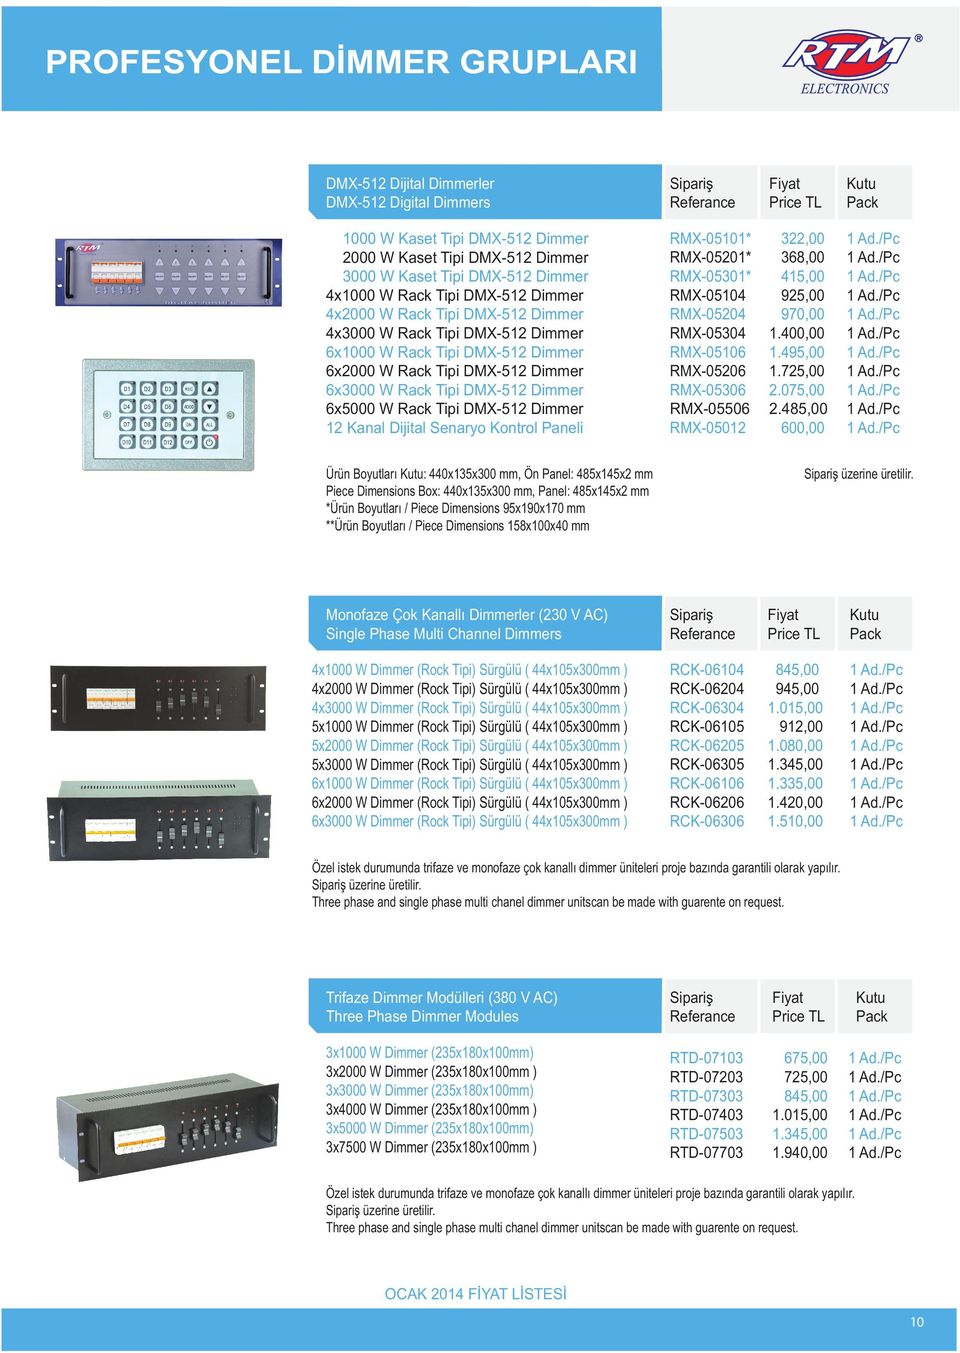 Tipi DMX-512 Dimmer 12 Kanal Dijital Senaryo Kontrol Paneli RMX-05101* RMX-05201* RMX-05301* RMX-05104 RMX-05204 RMX-05304 RMX-05106 RMX-05206 RMX-05306 RMX-05506 RMX-05012 322,00 368,00 415,00